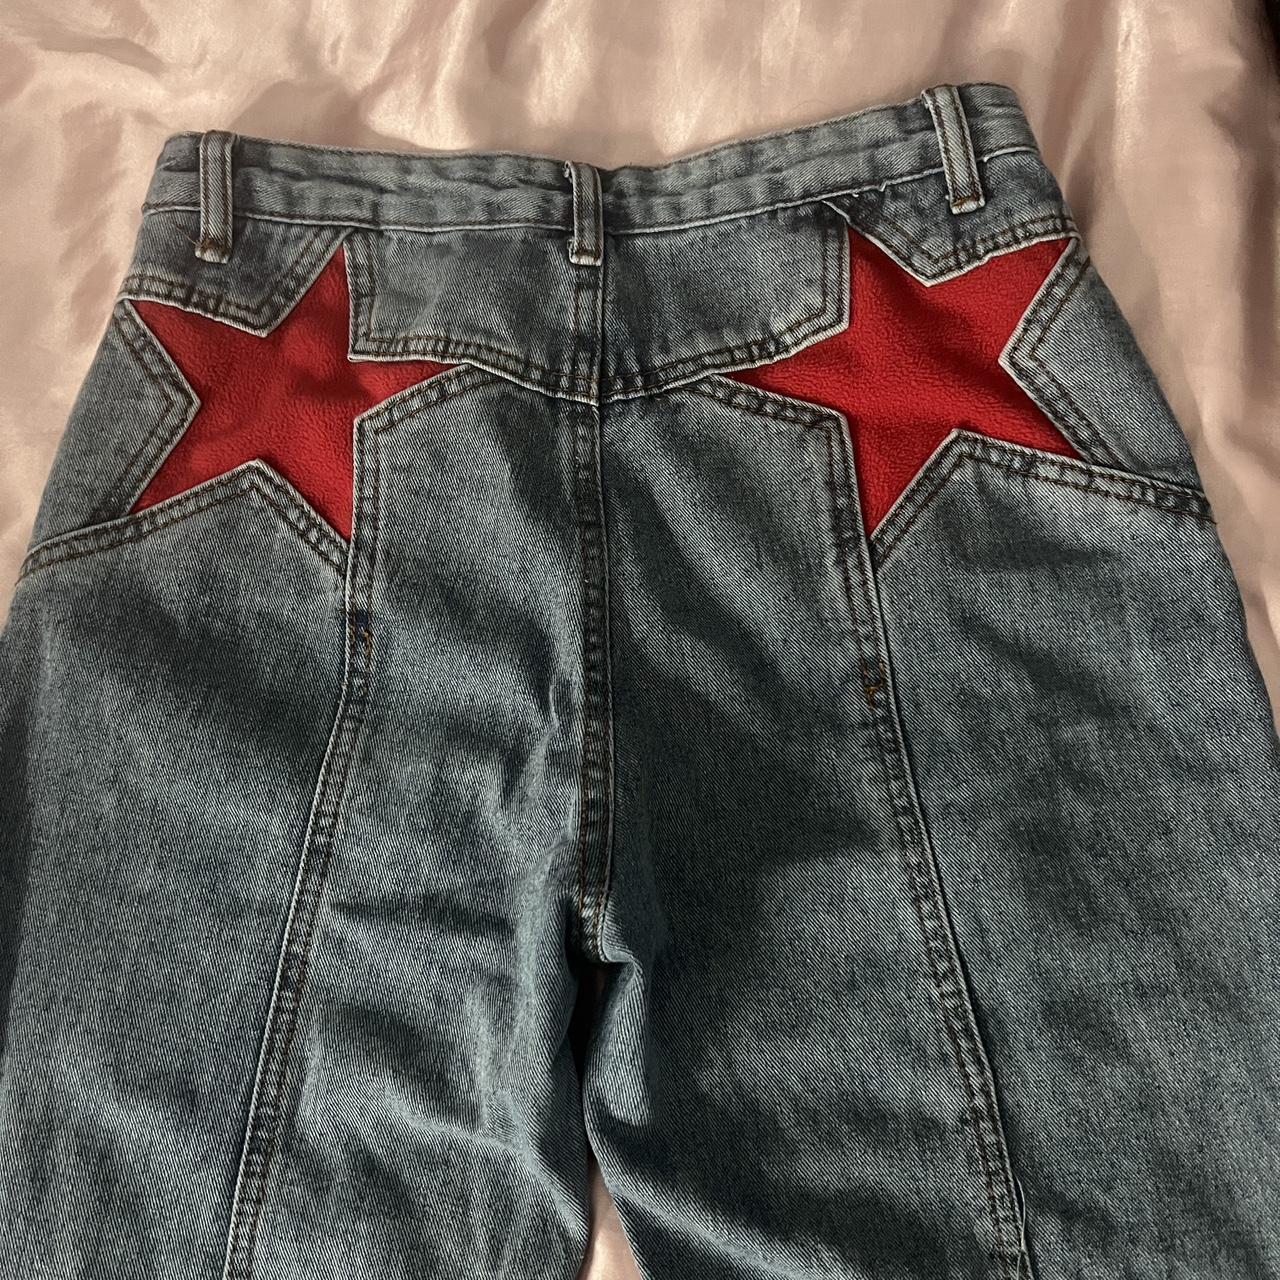 Red star jeans - Depop